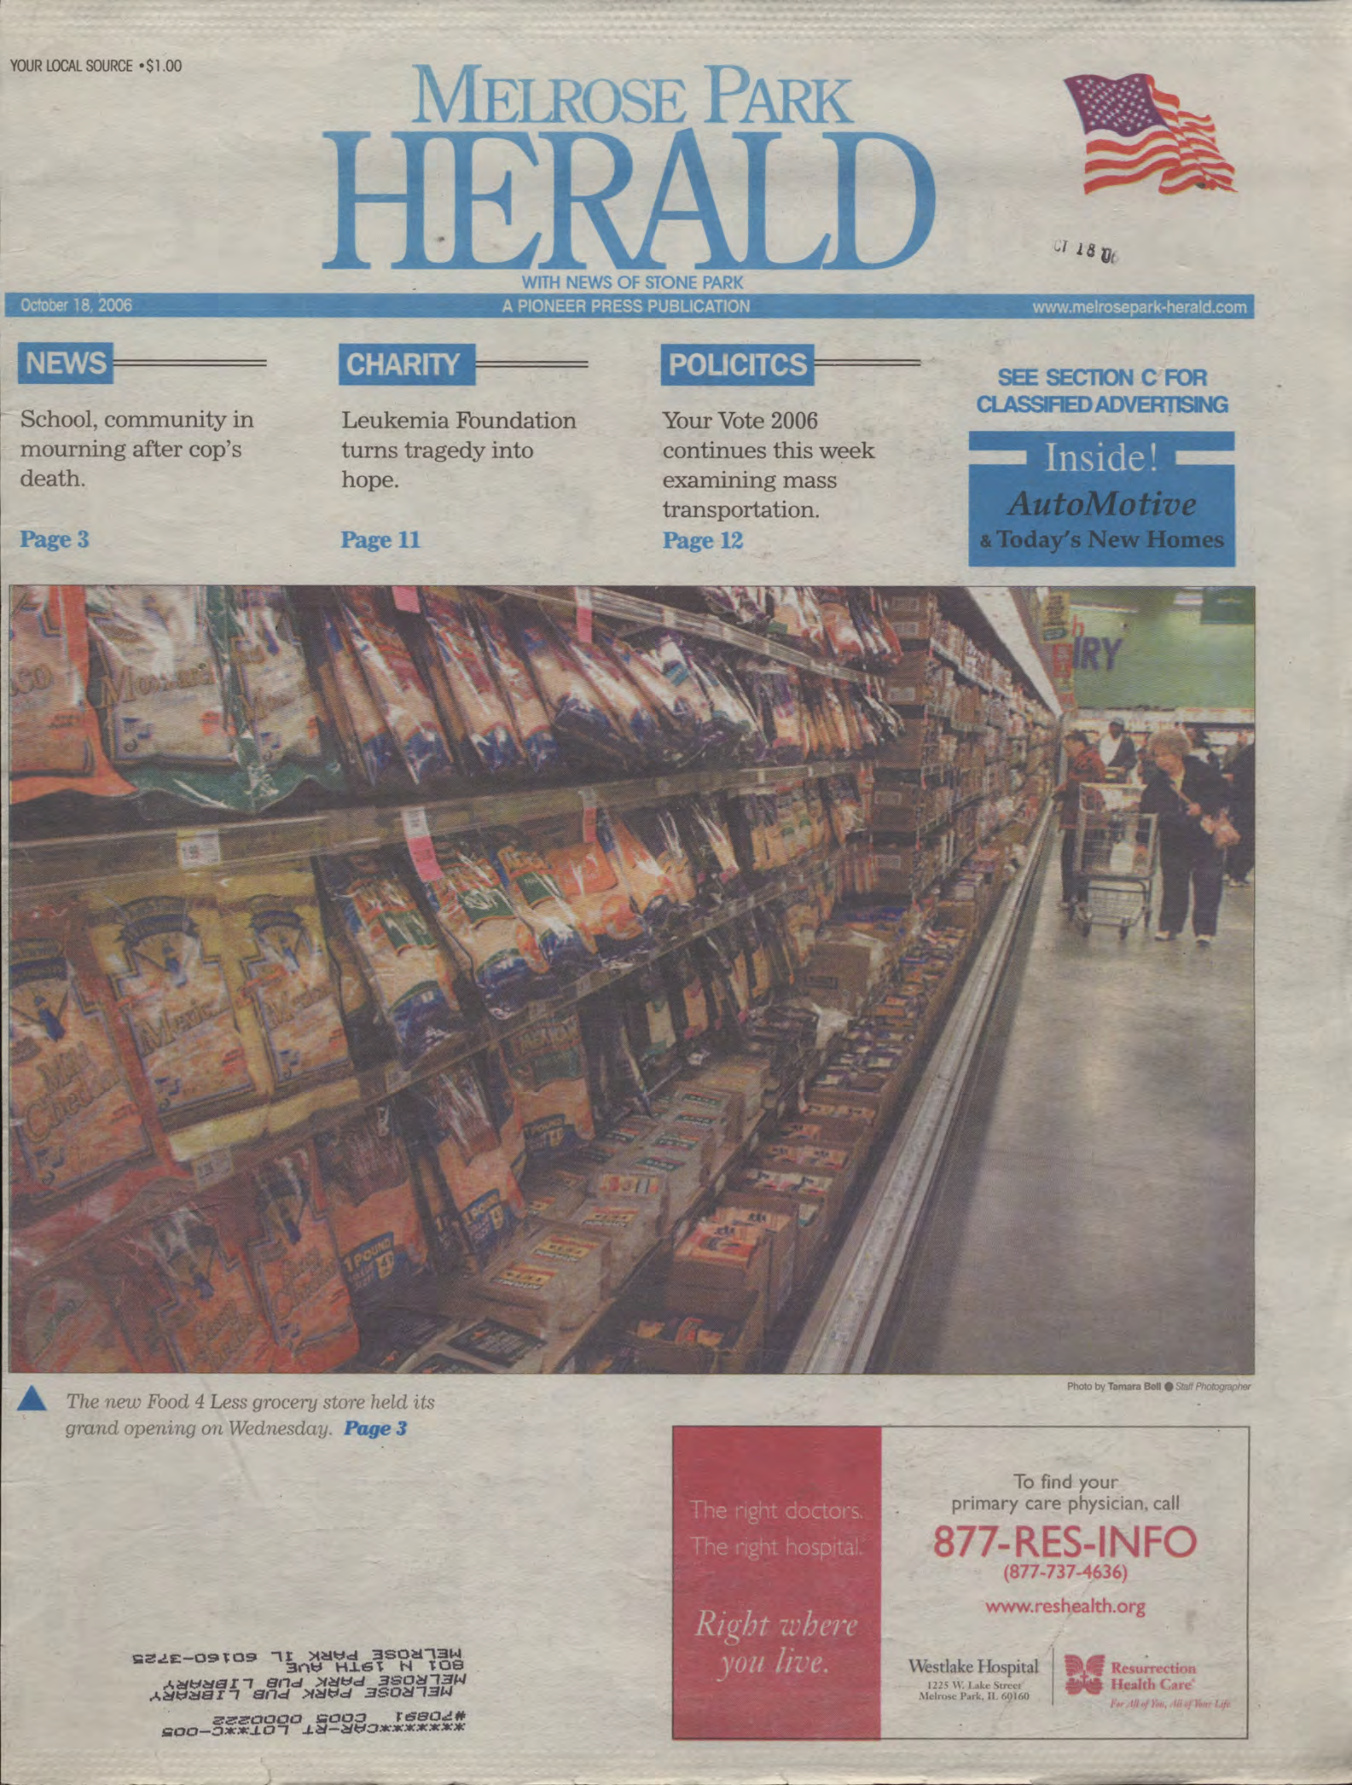 The Herald – 20061018